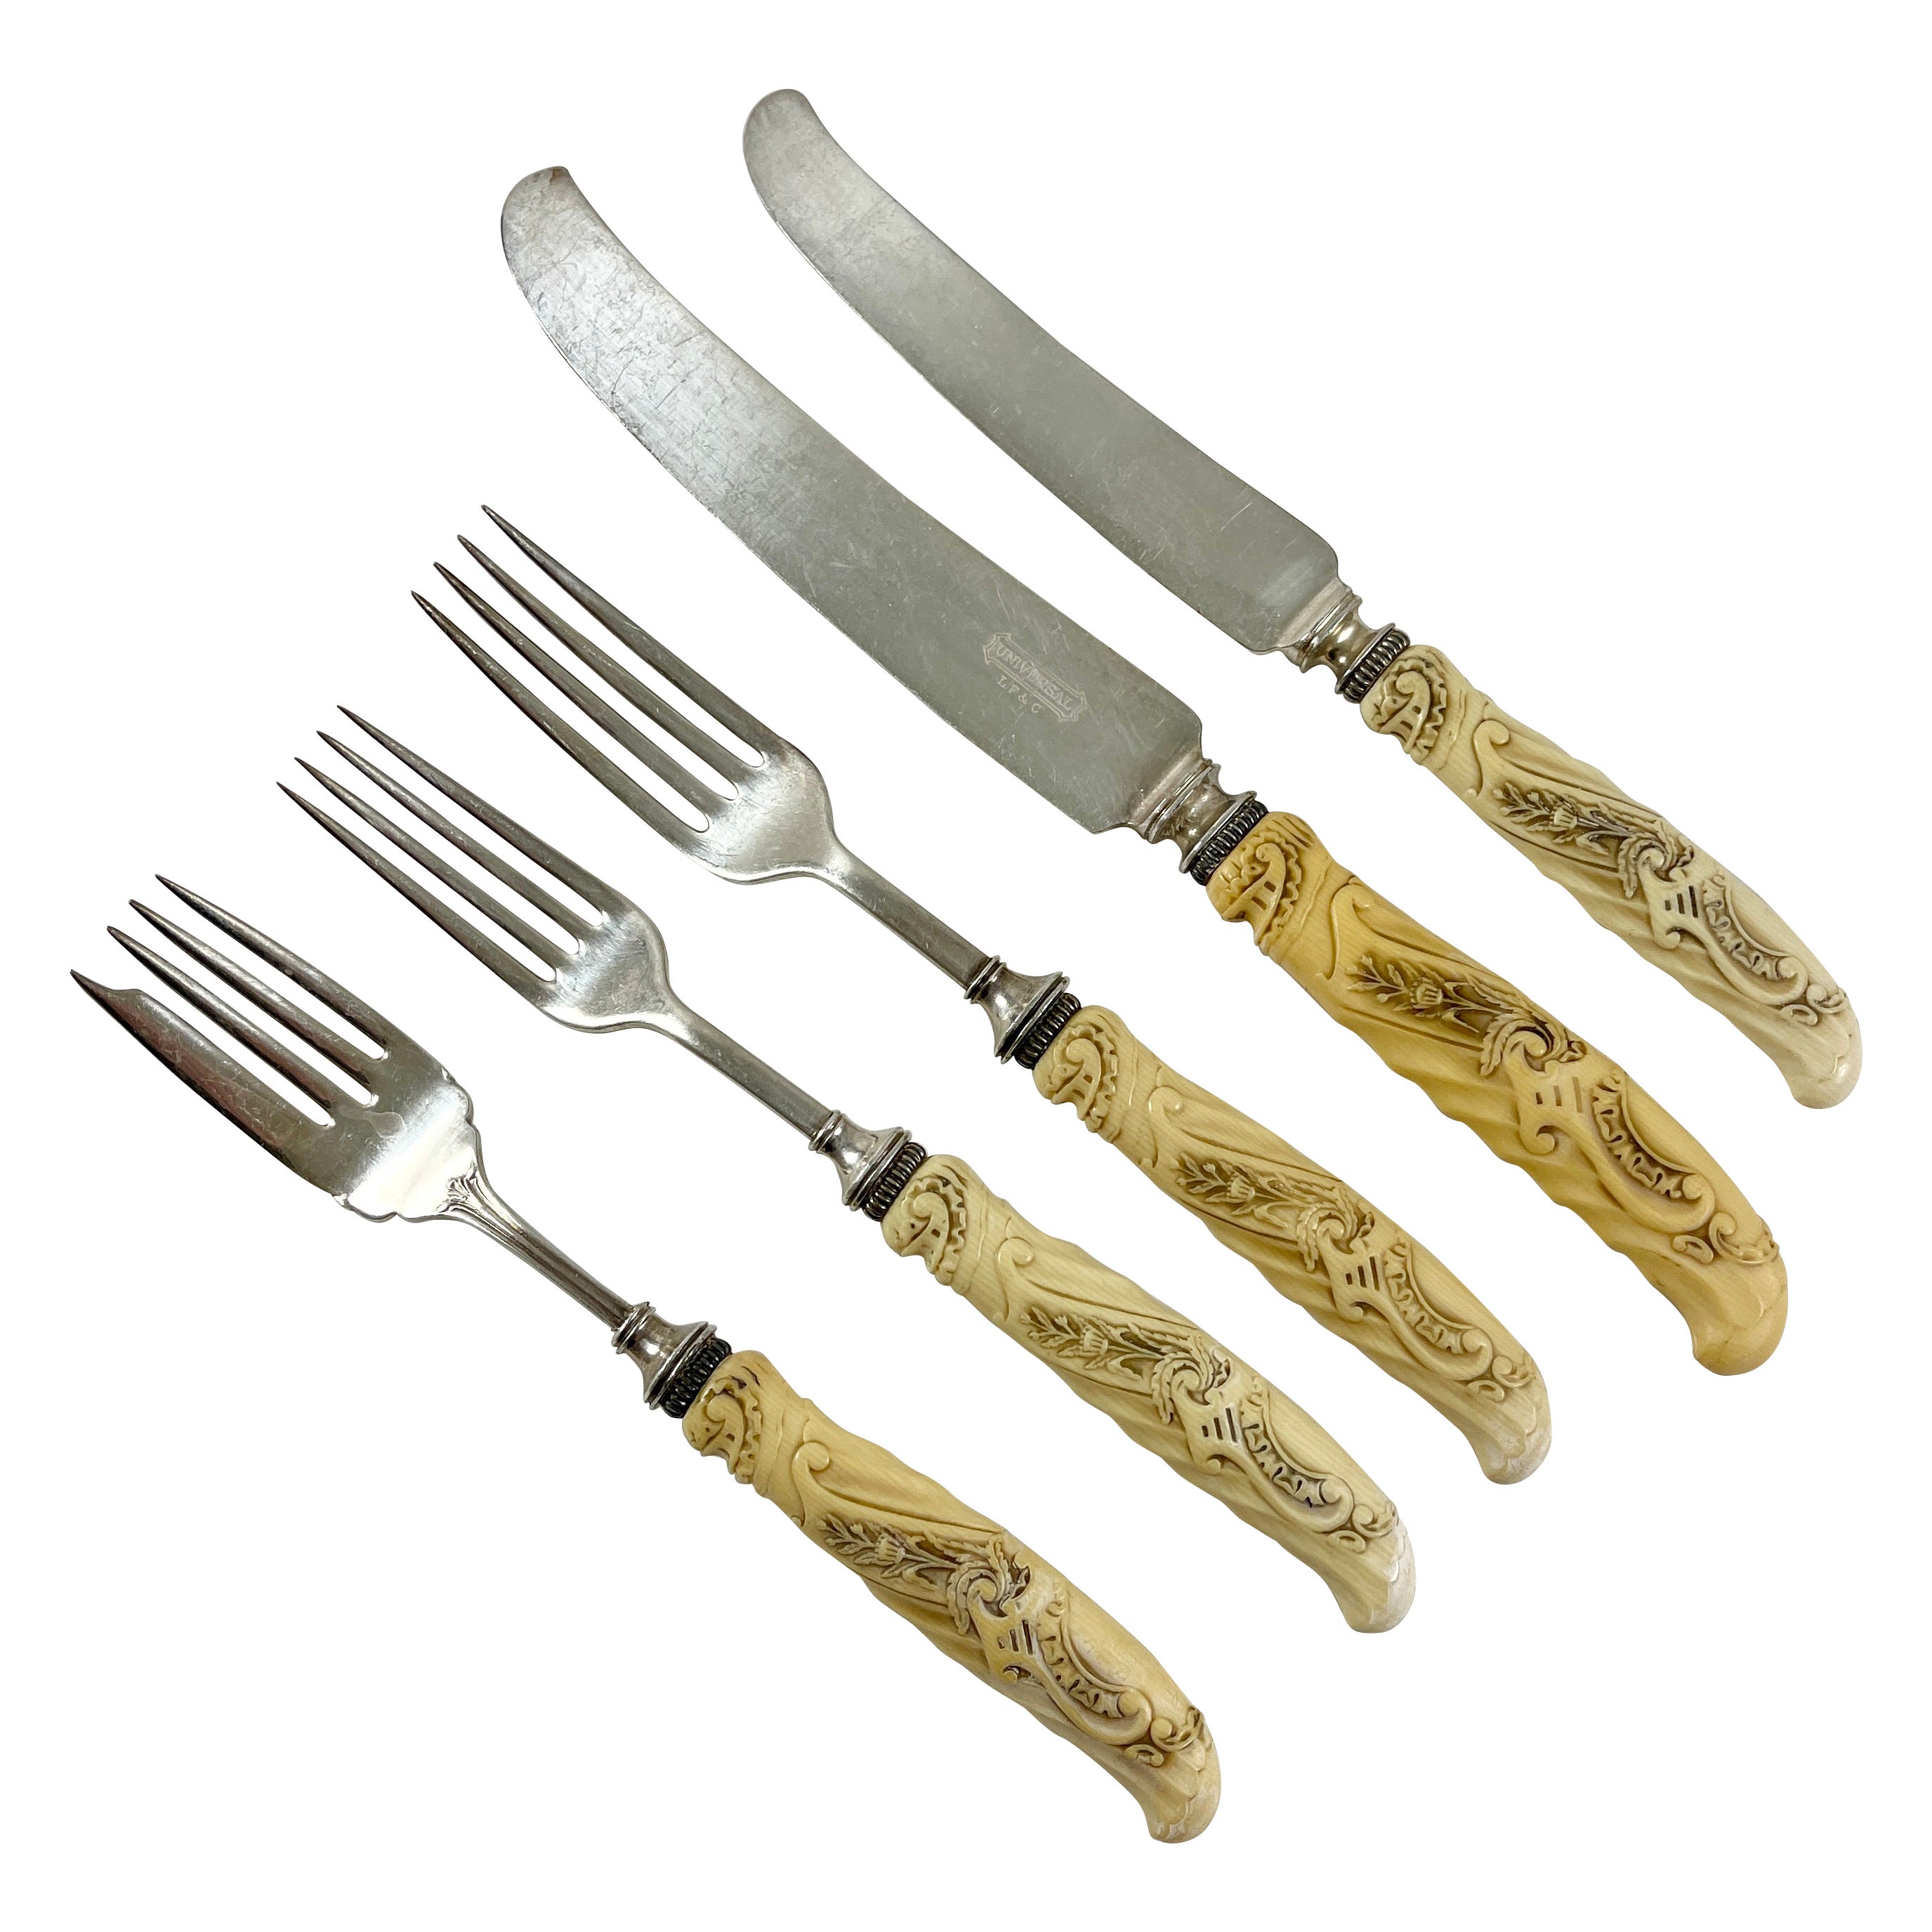 Landers, Frary & Clark Celluloid Ivory Handled Tableware Cutlery – 30 piece Set